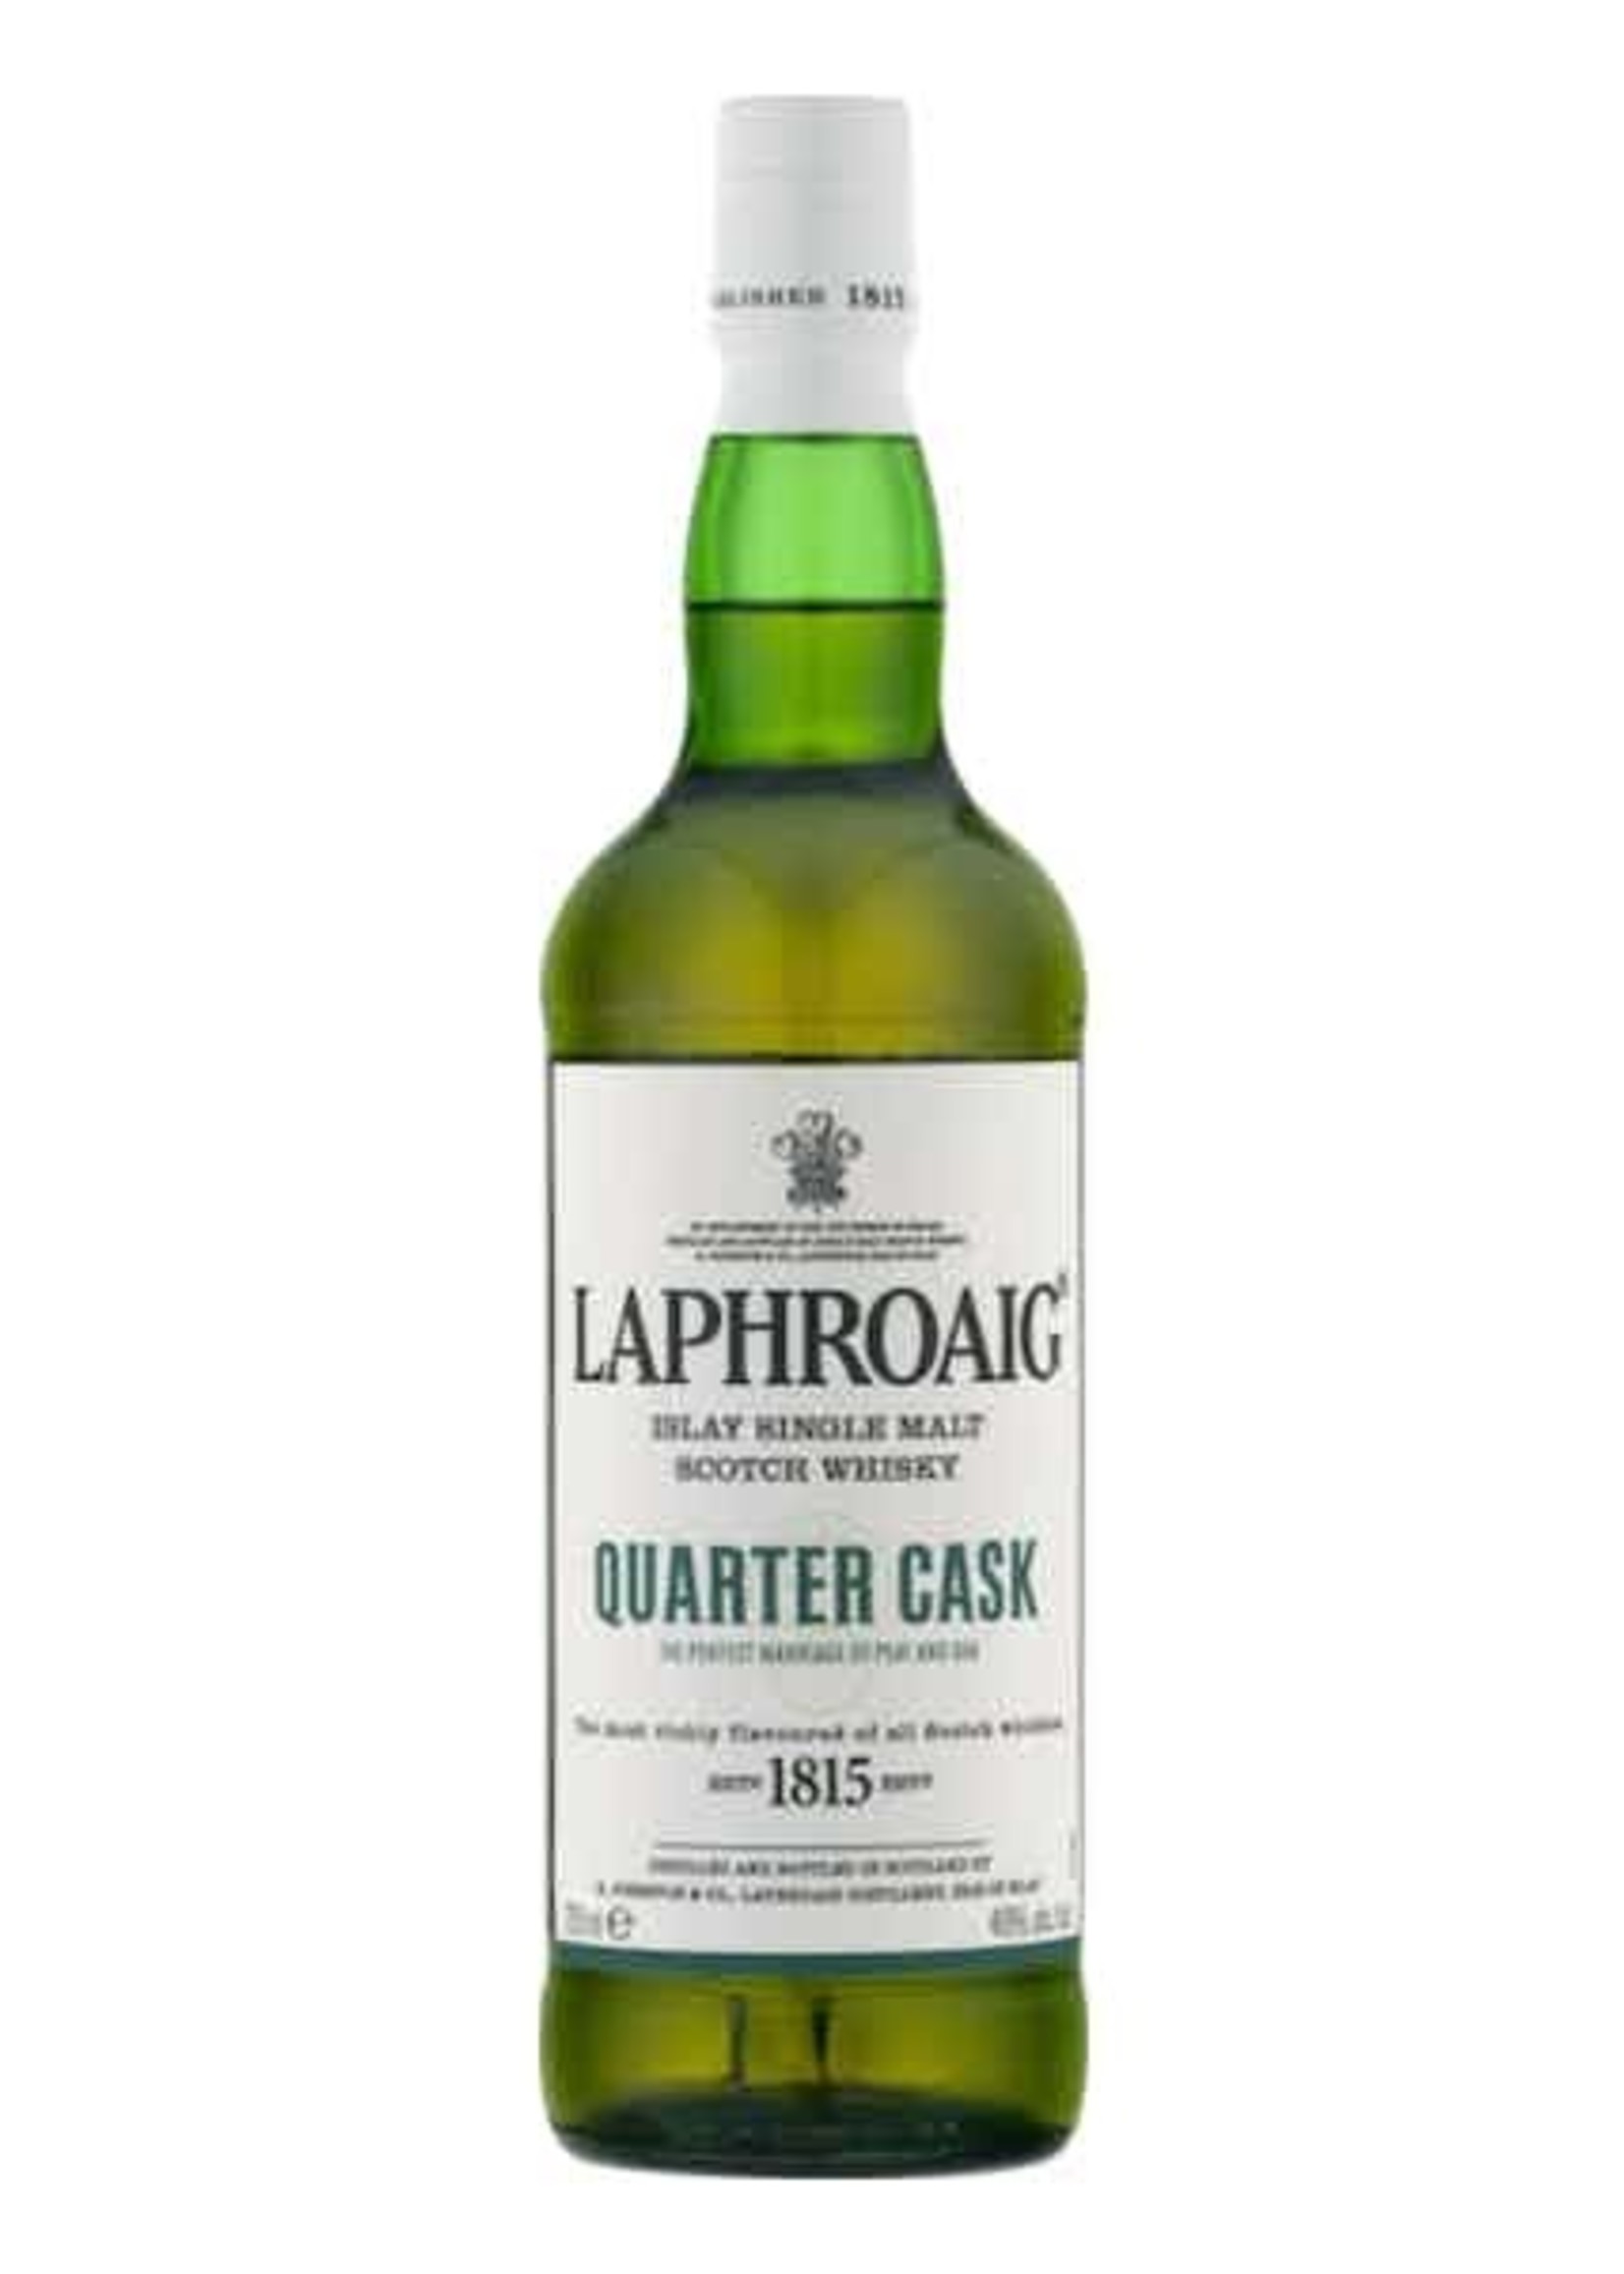 Laphroaig Laphroaig  Quarter Cask Single Malt Scotch Whisky